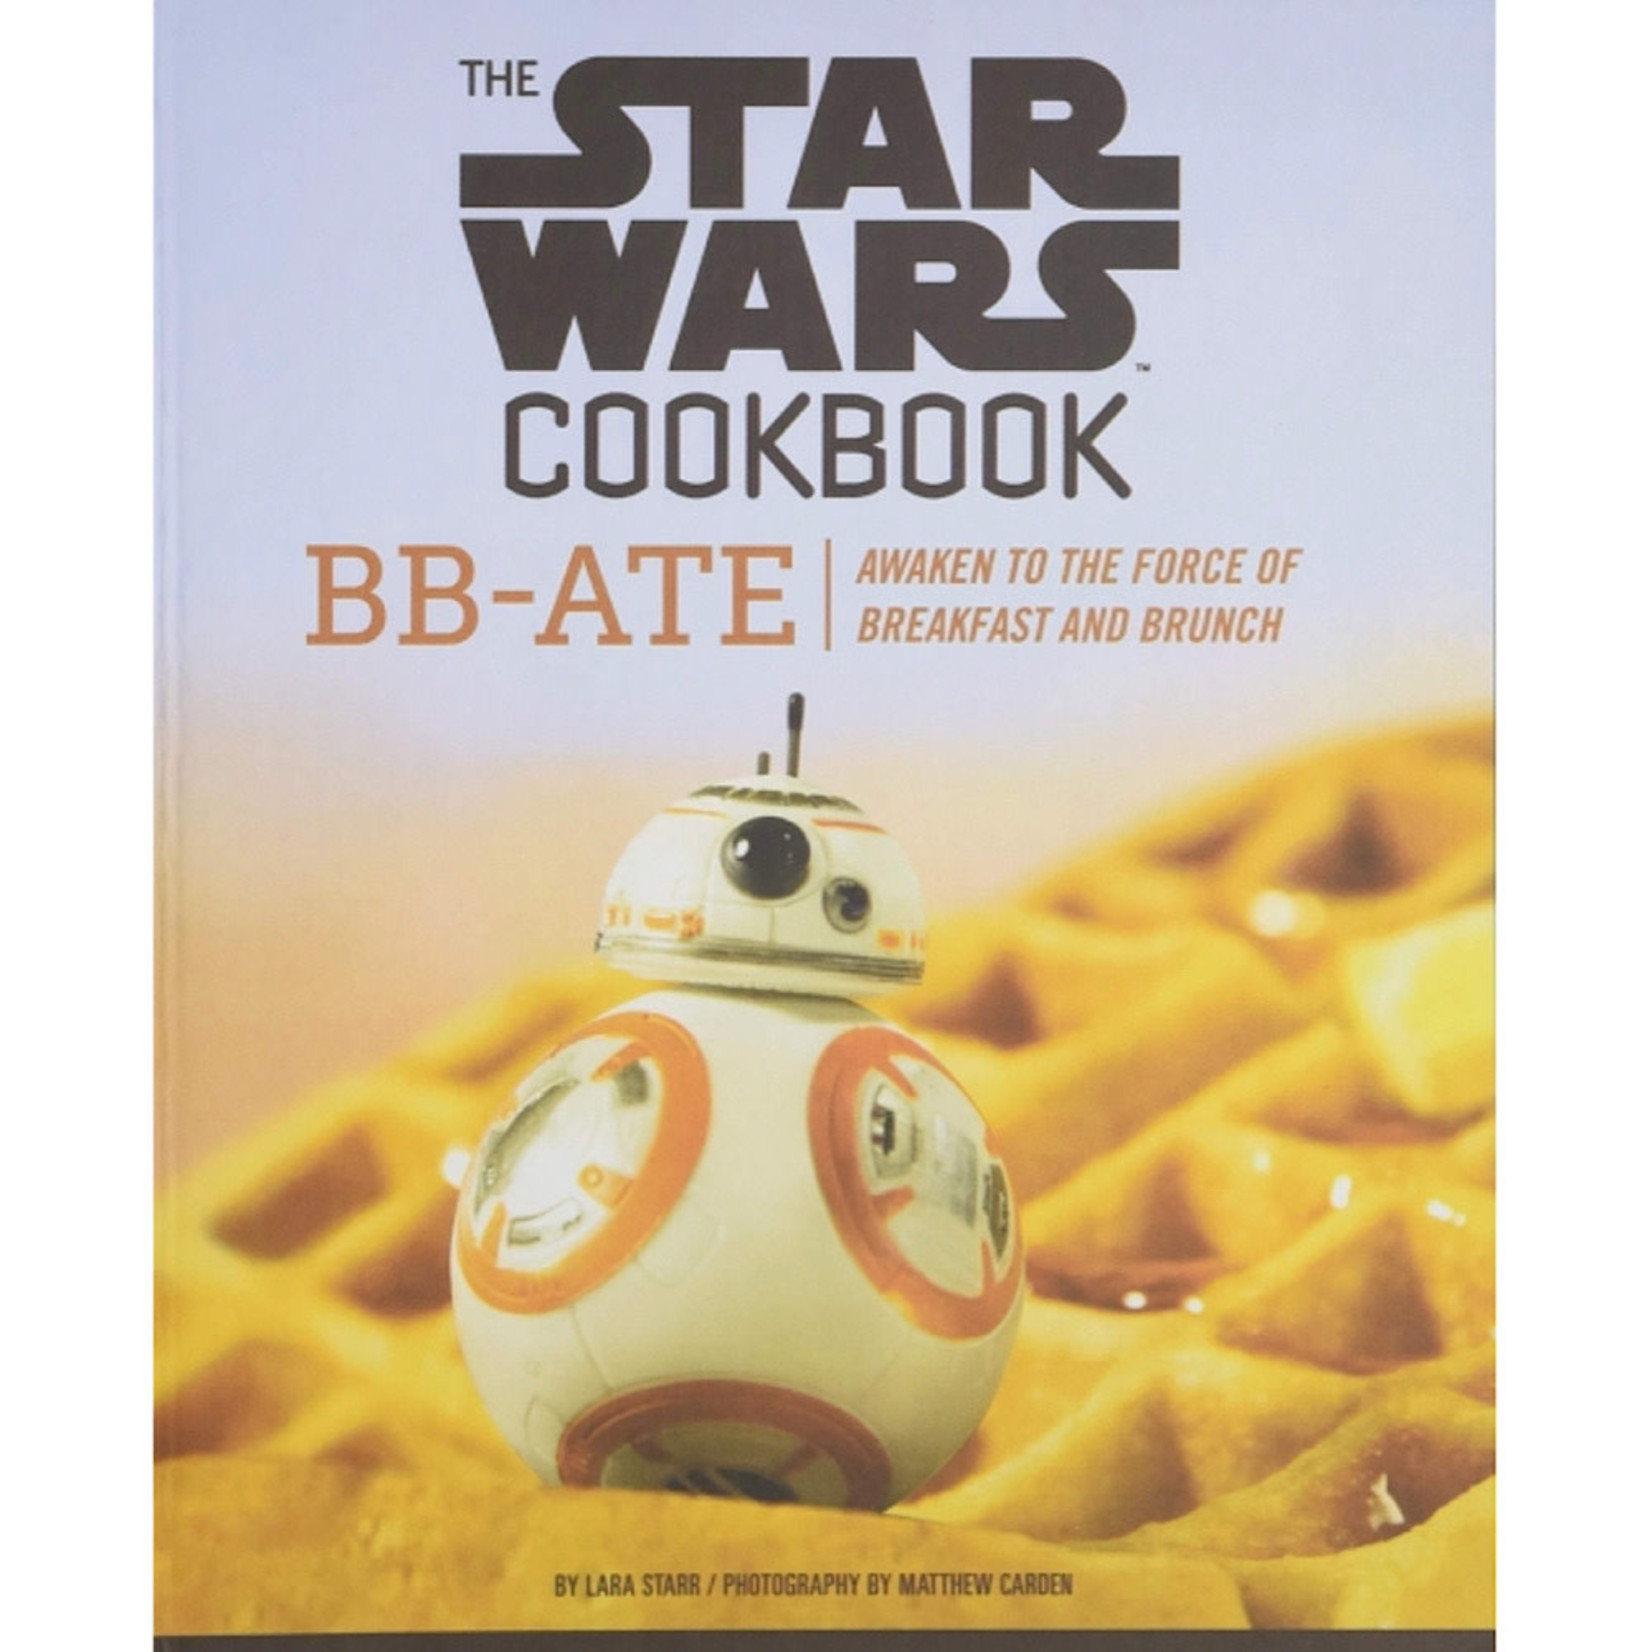 Book - Star Wars Cookbook BB-ATE